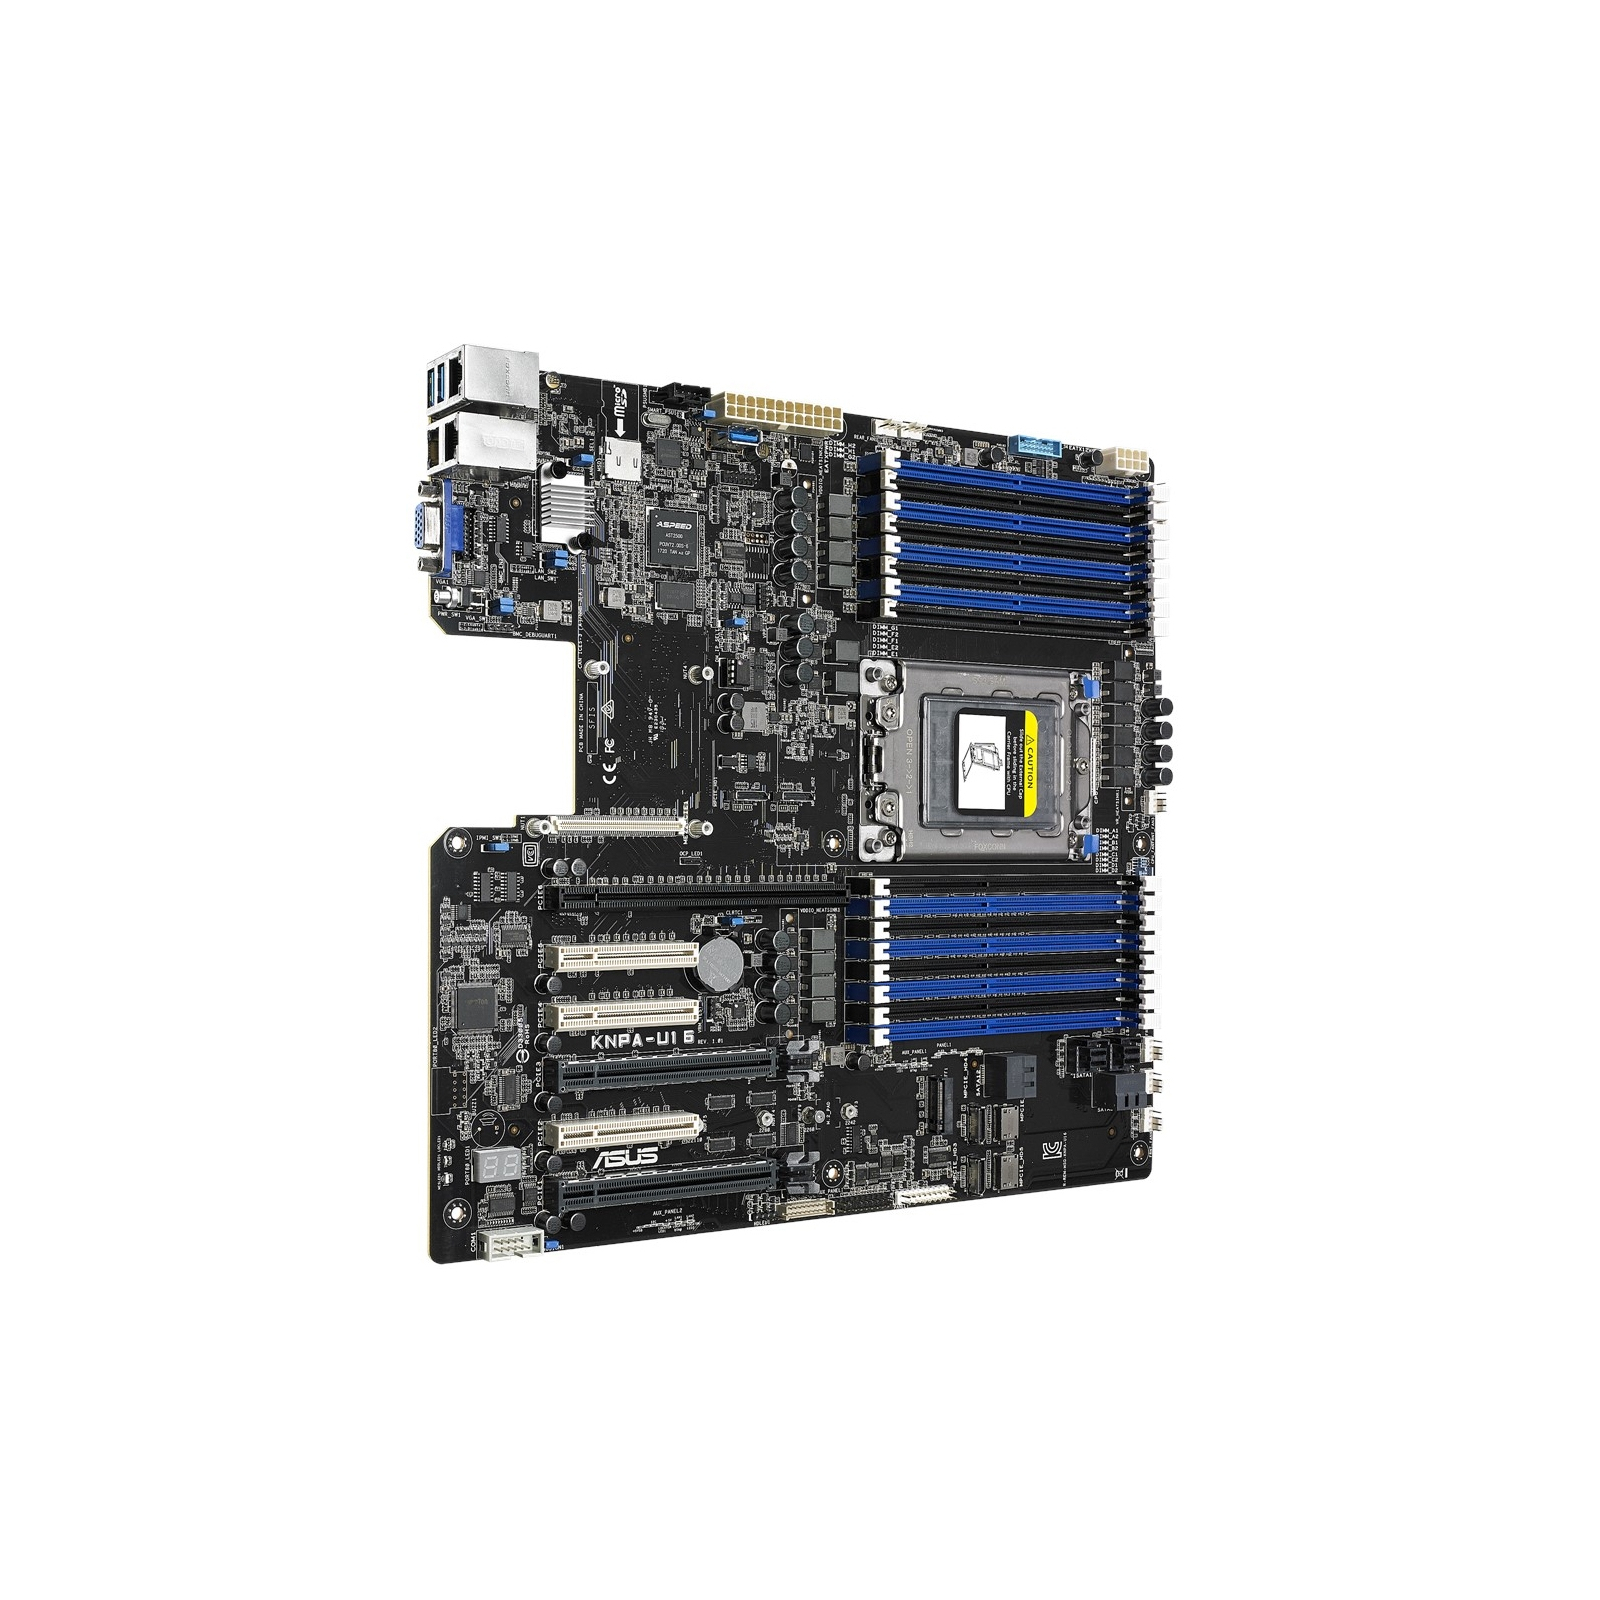 Серверна материнська плата ASUS KNPA-U16 SP3 AMD EPYC™ 7000 Series 16xDDR4 VGA AST2500 64MB (KNPA-U16) зображення 3